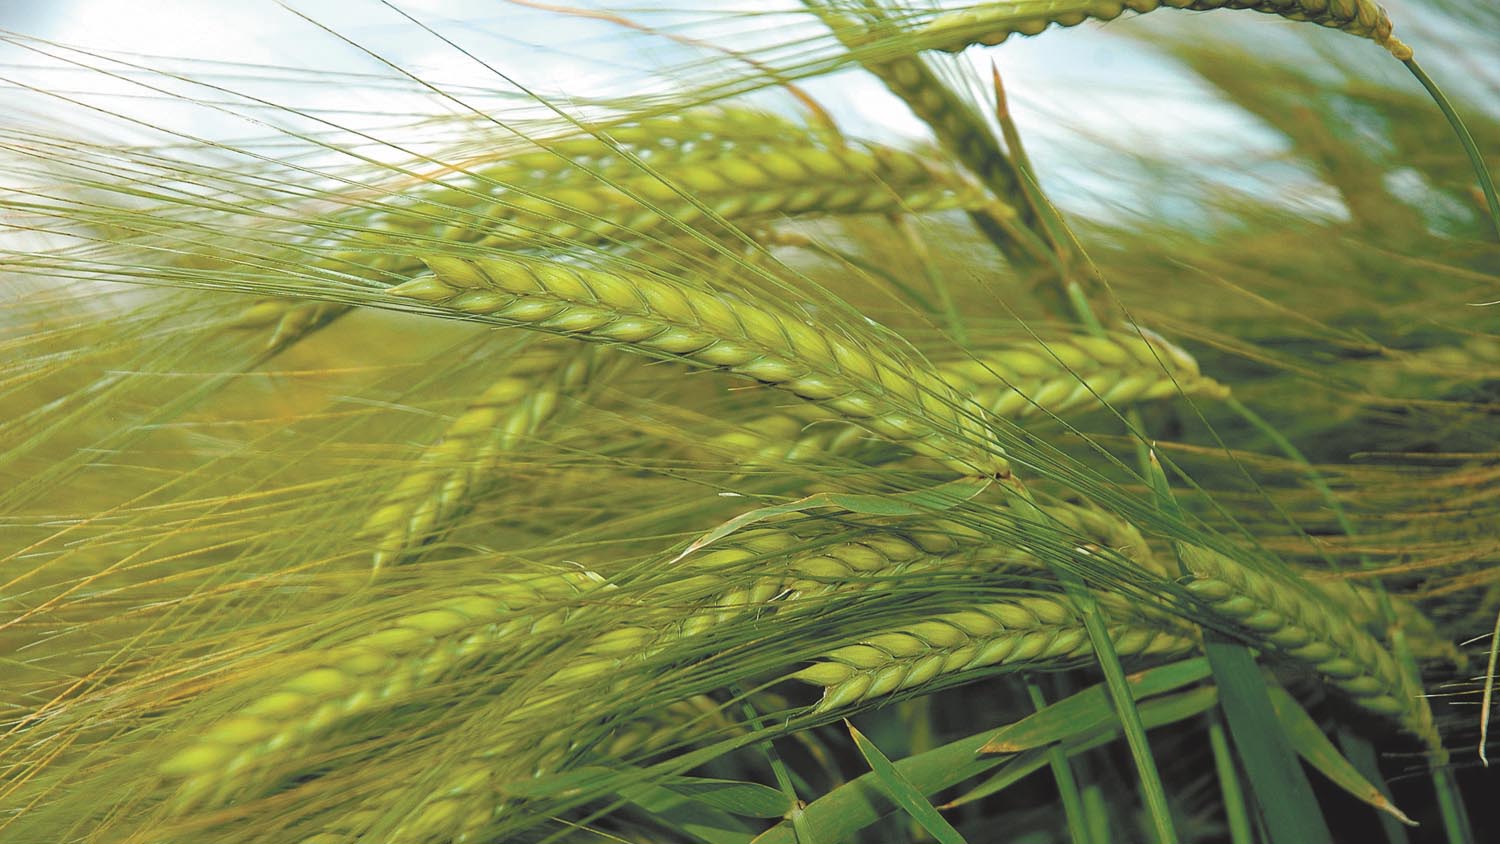 2016 Barley harvest yields were below average